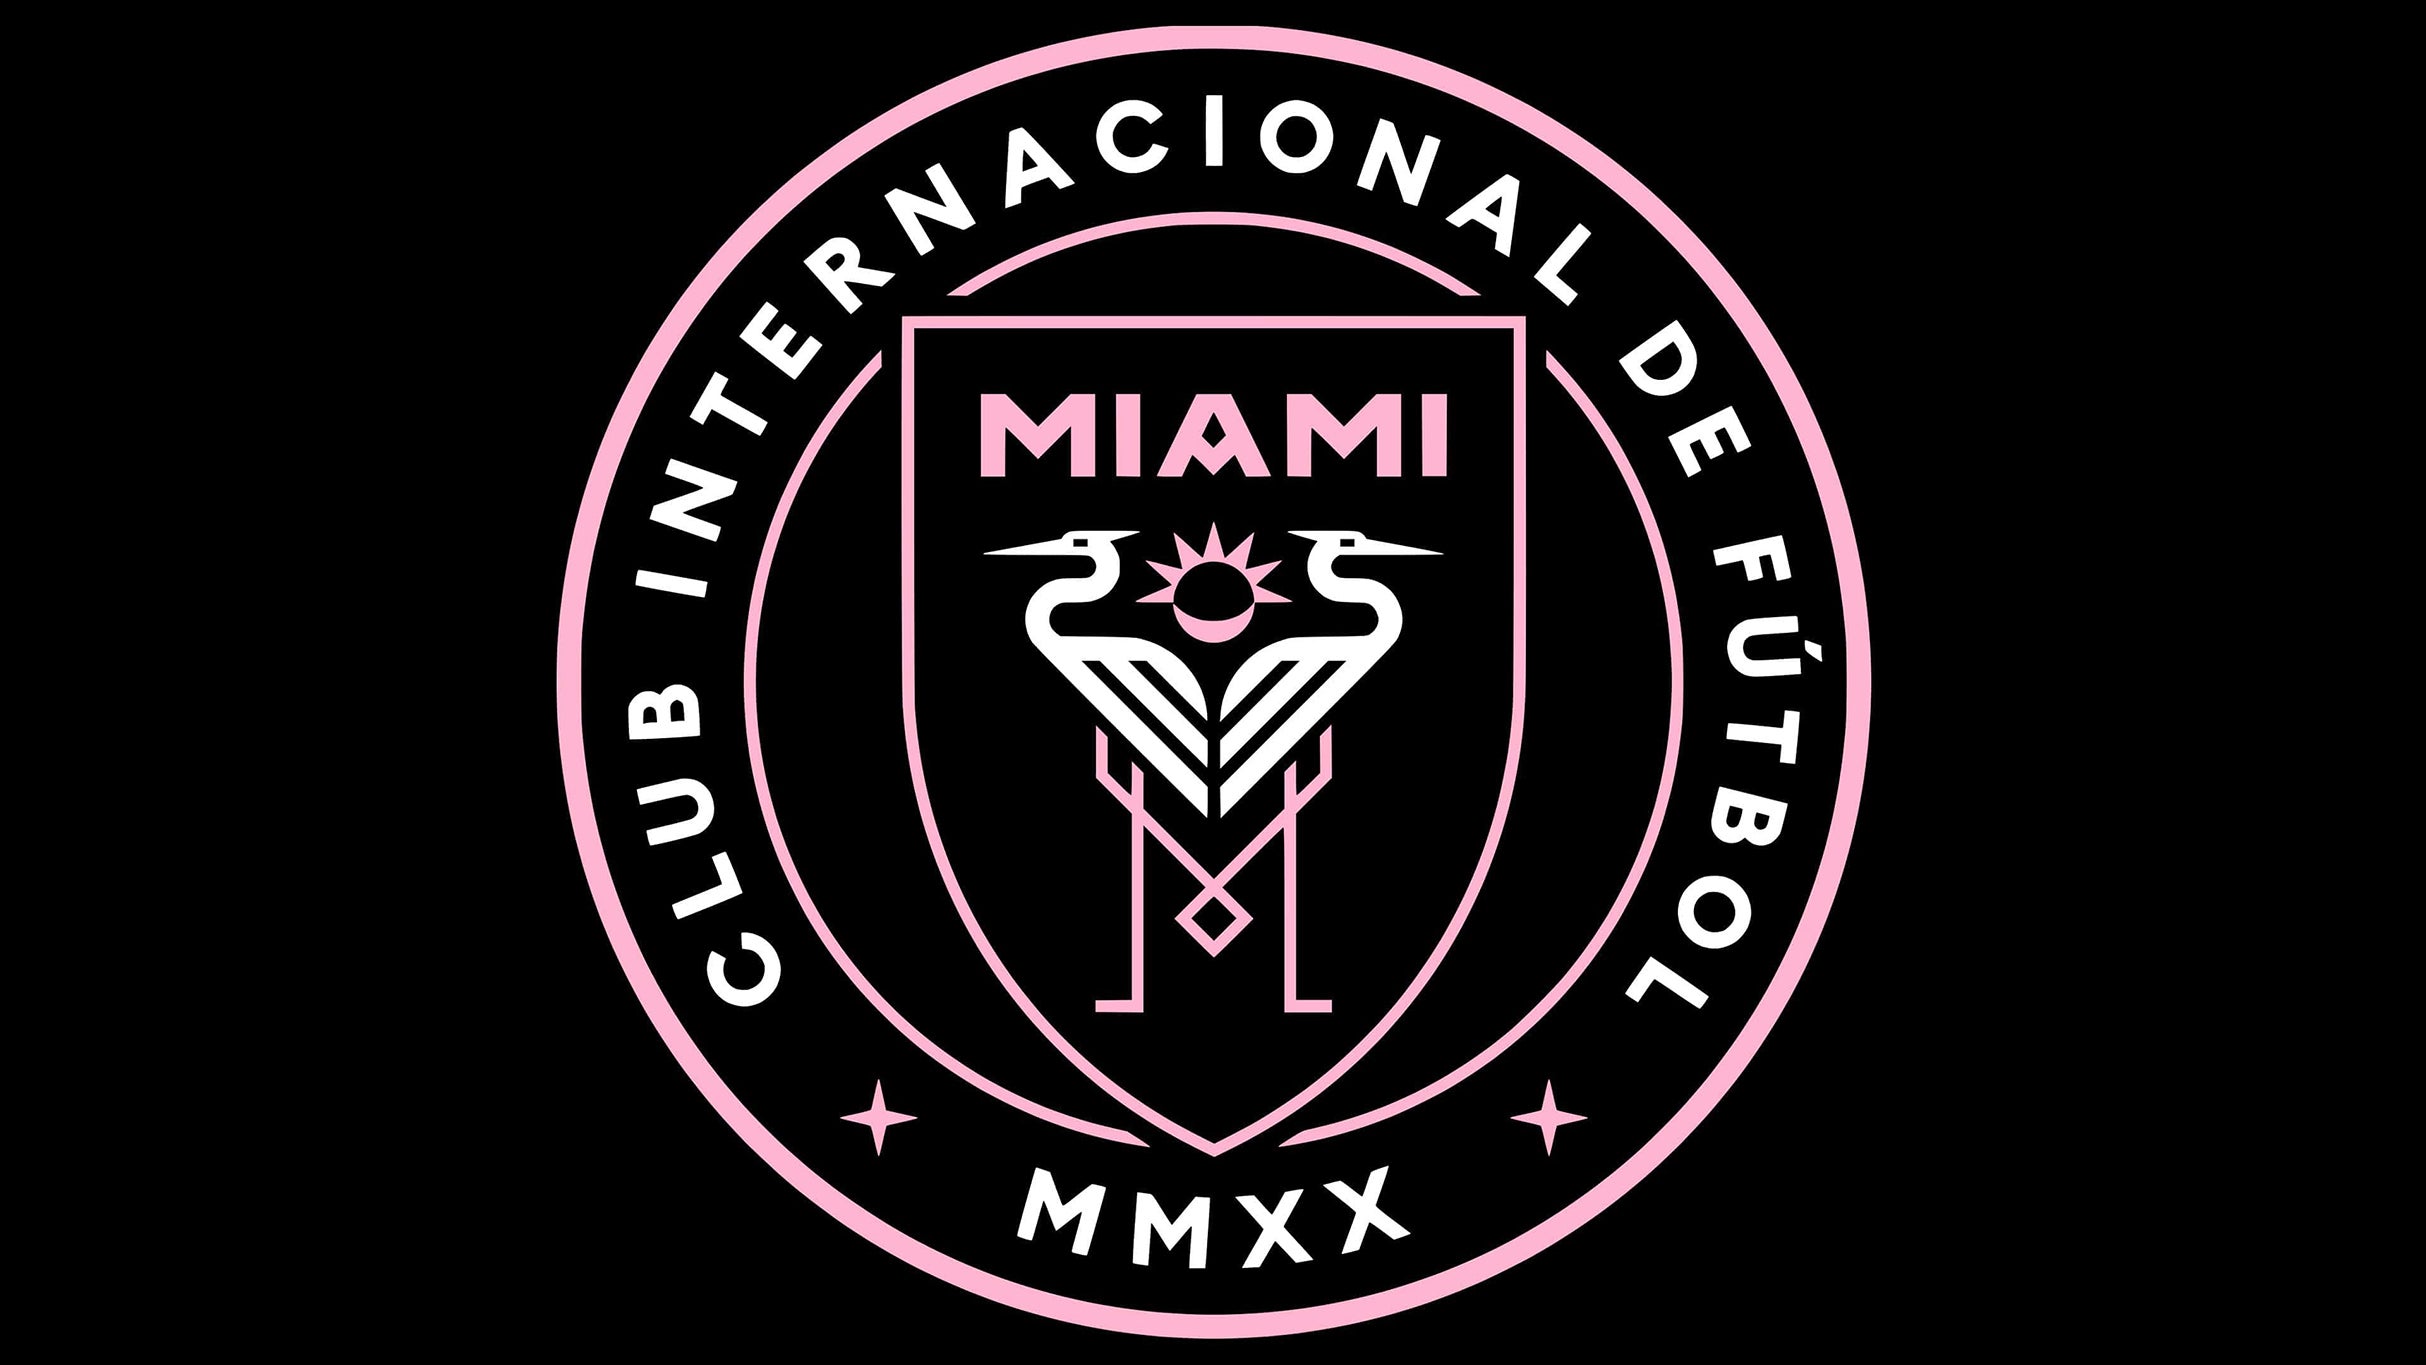 Inter Miami CF v New York City FC in Fort Lauderdale promo photo for IMCF Season presale offer code